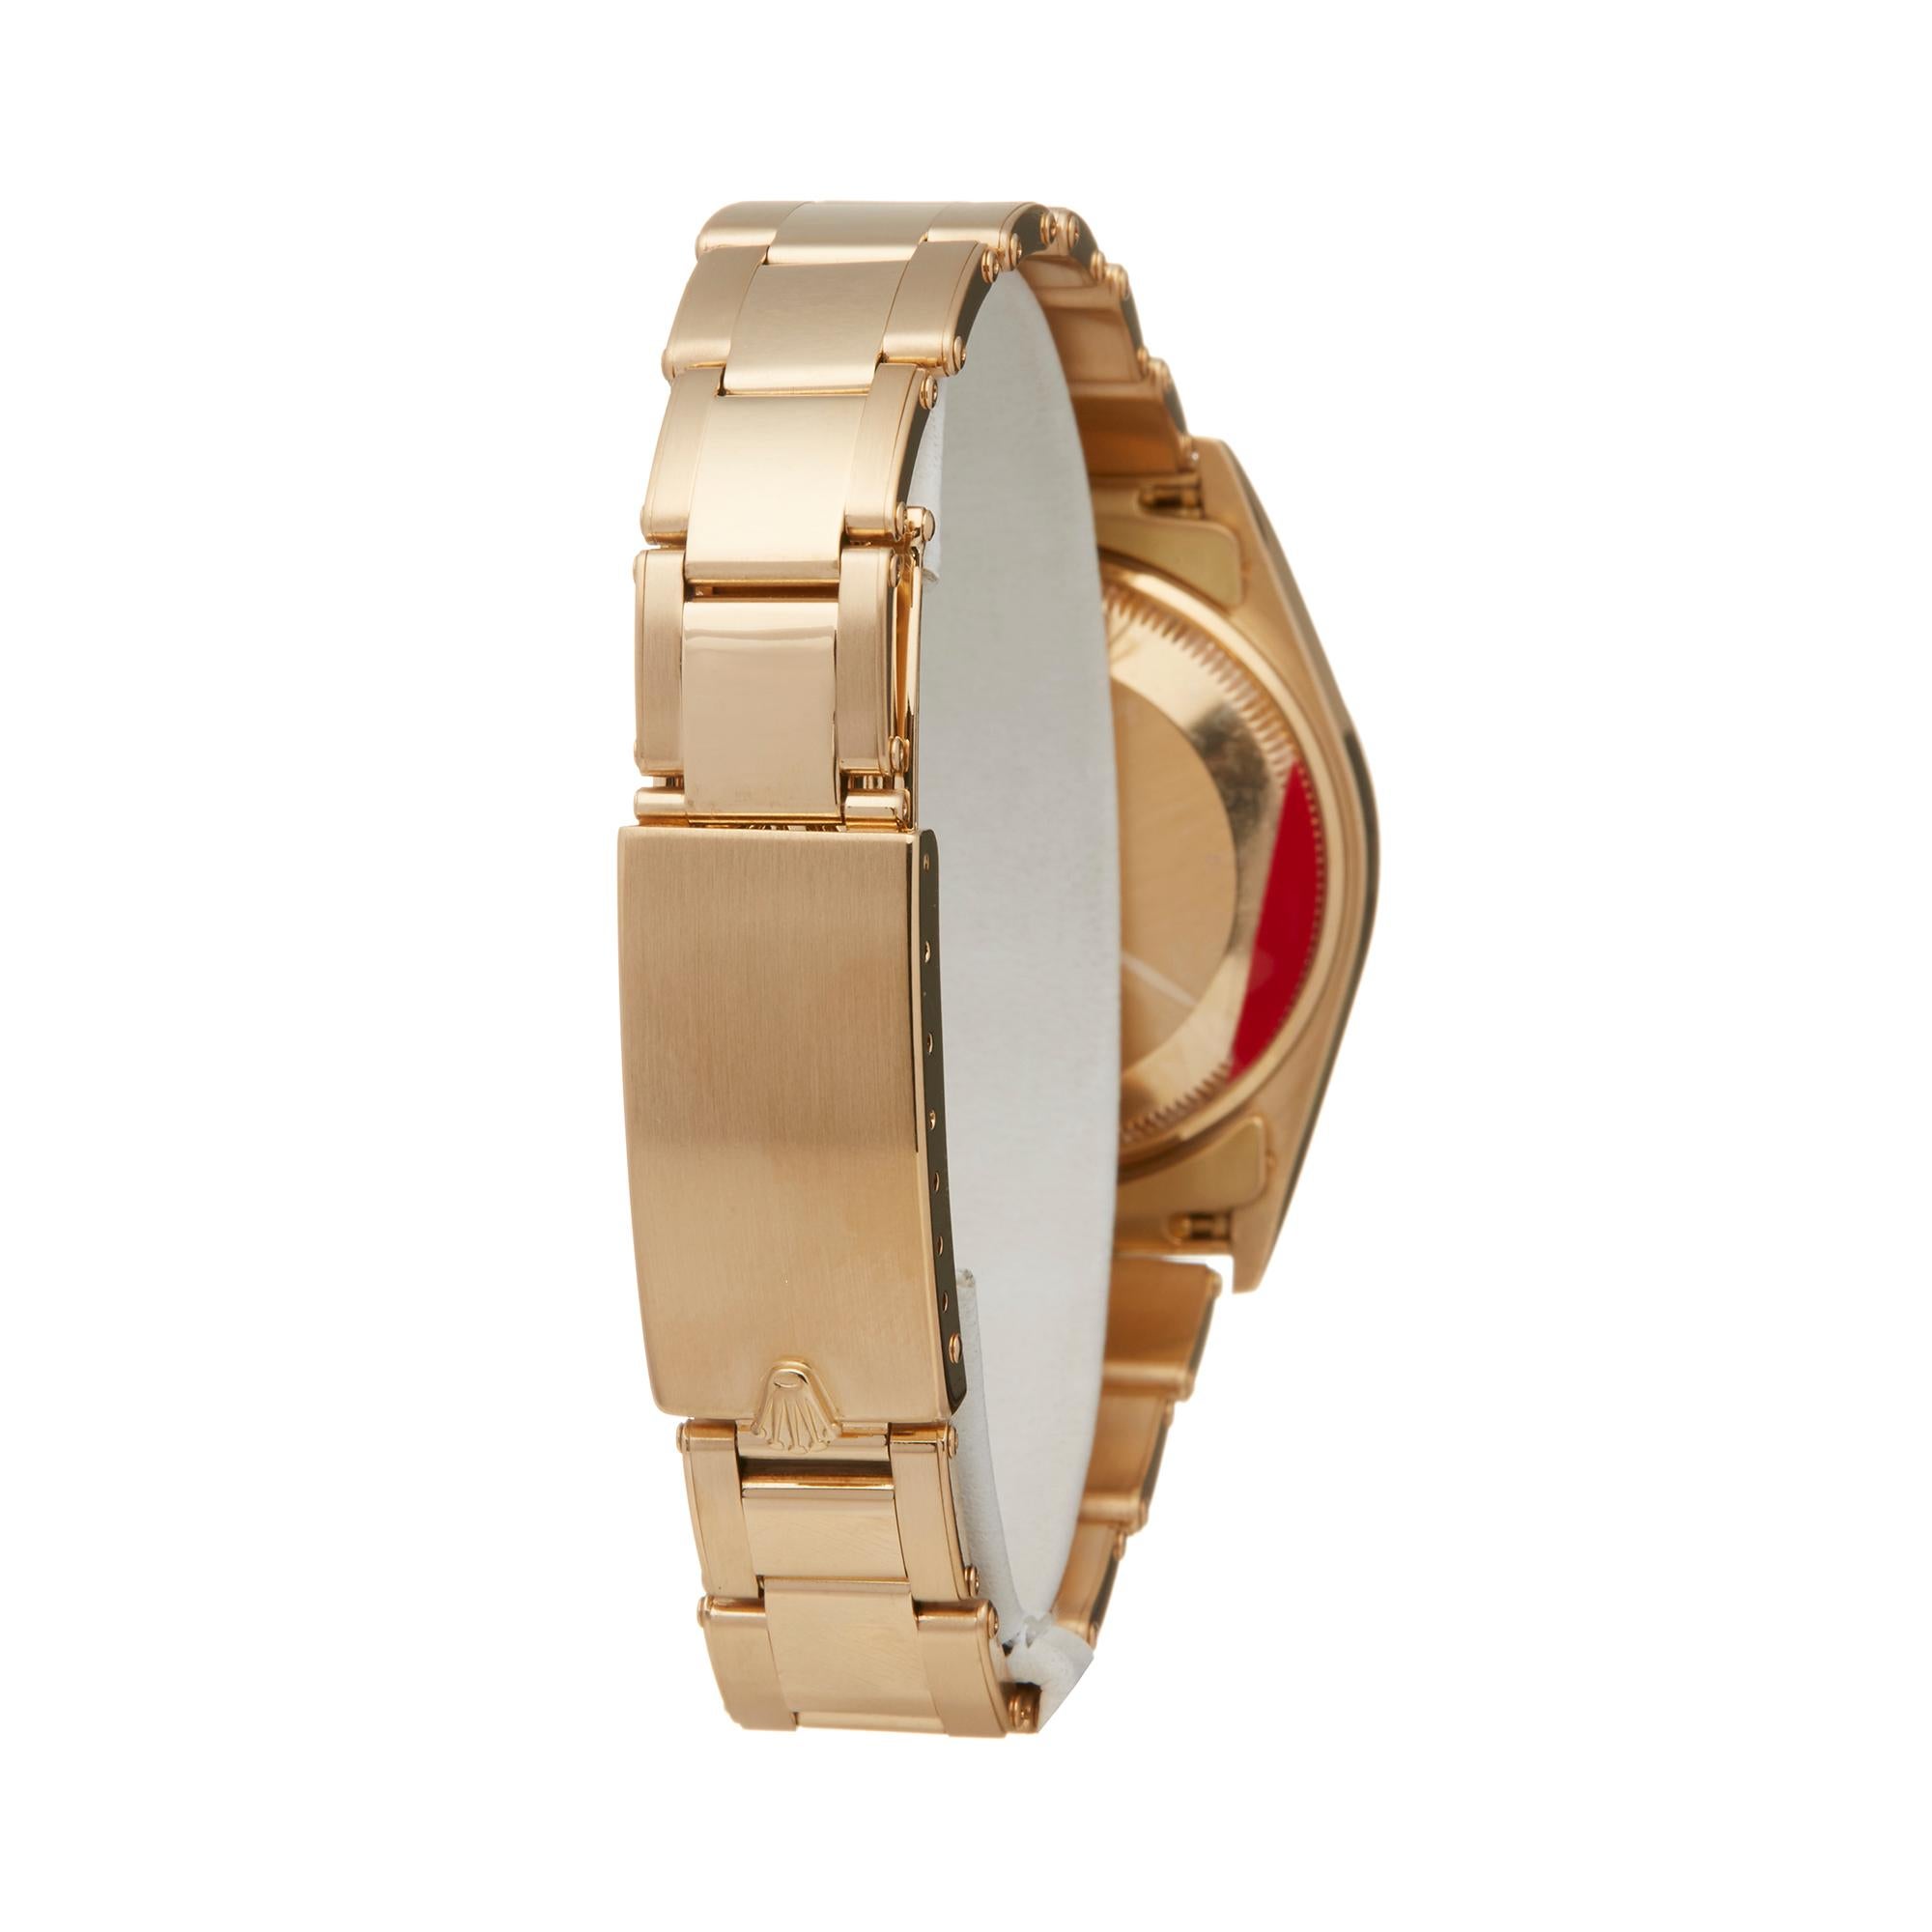 Rolex Oyster Perpetual Date 18 Karat Yellow Gold 15238 Wristwatch 1